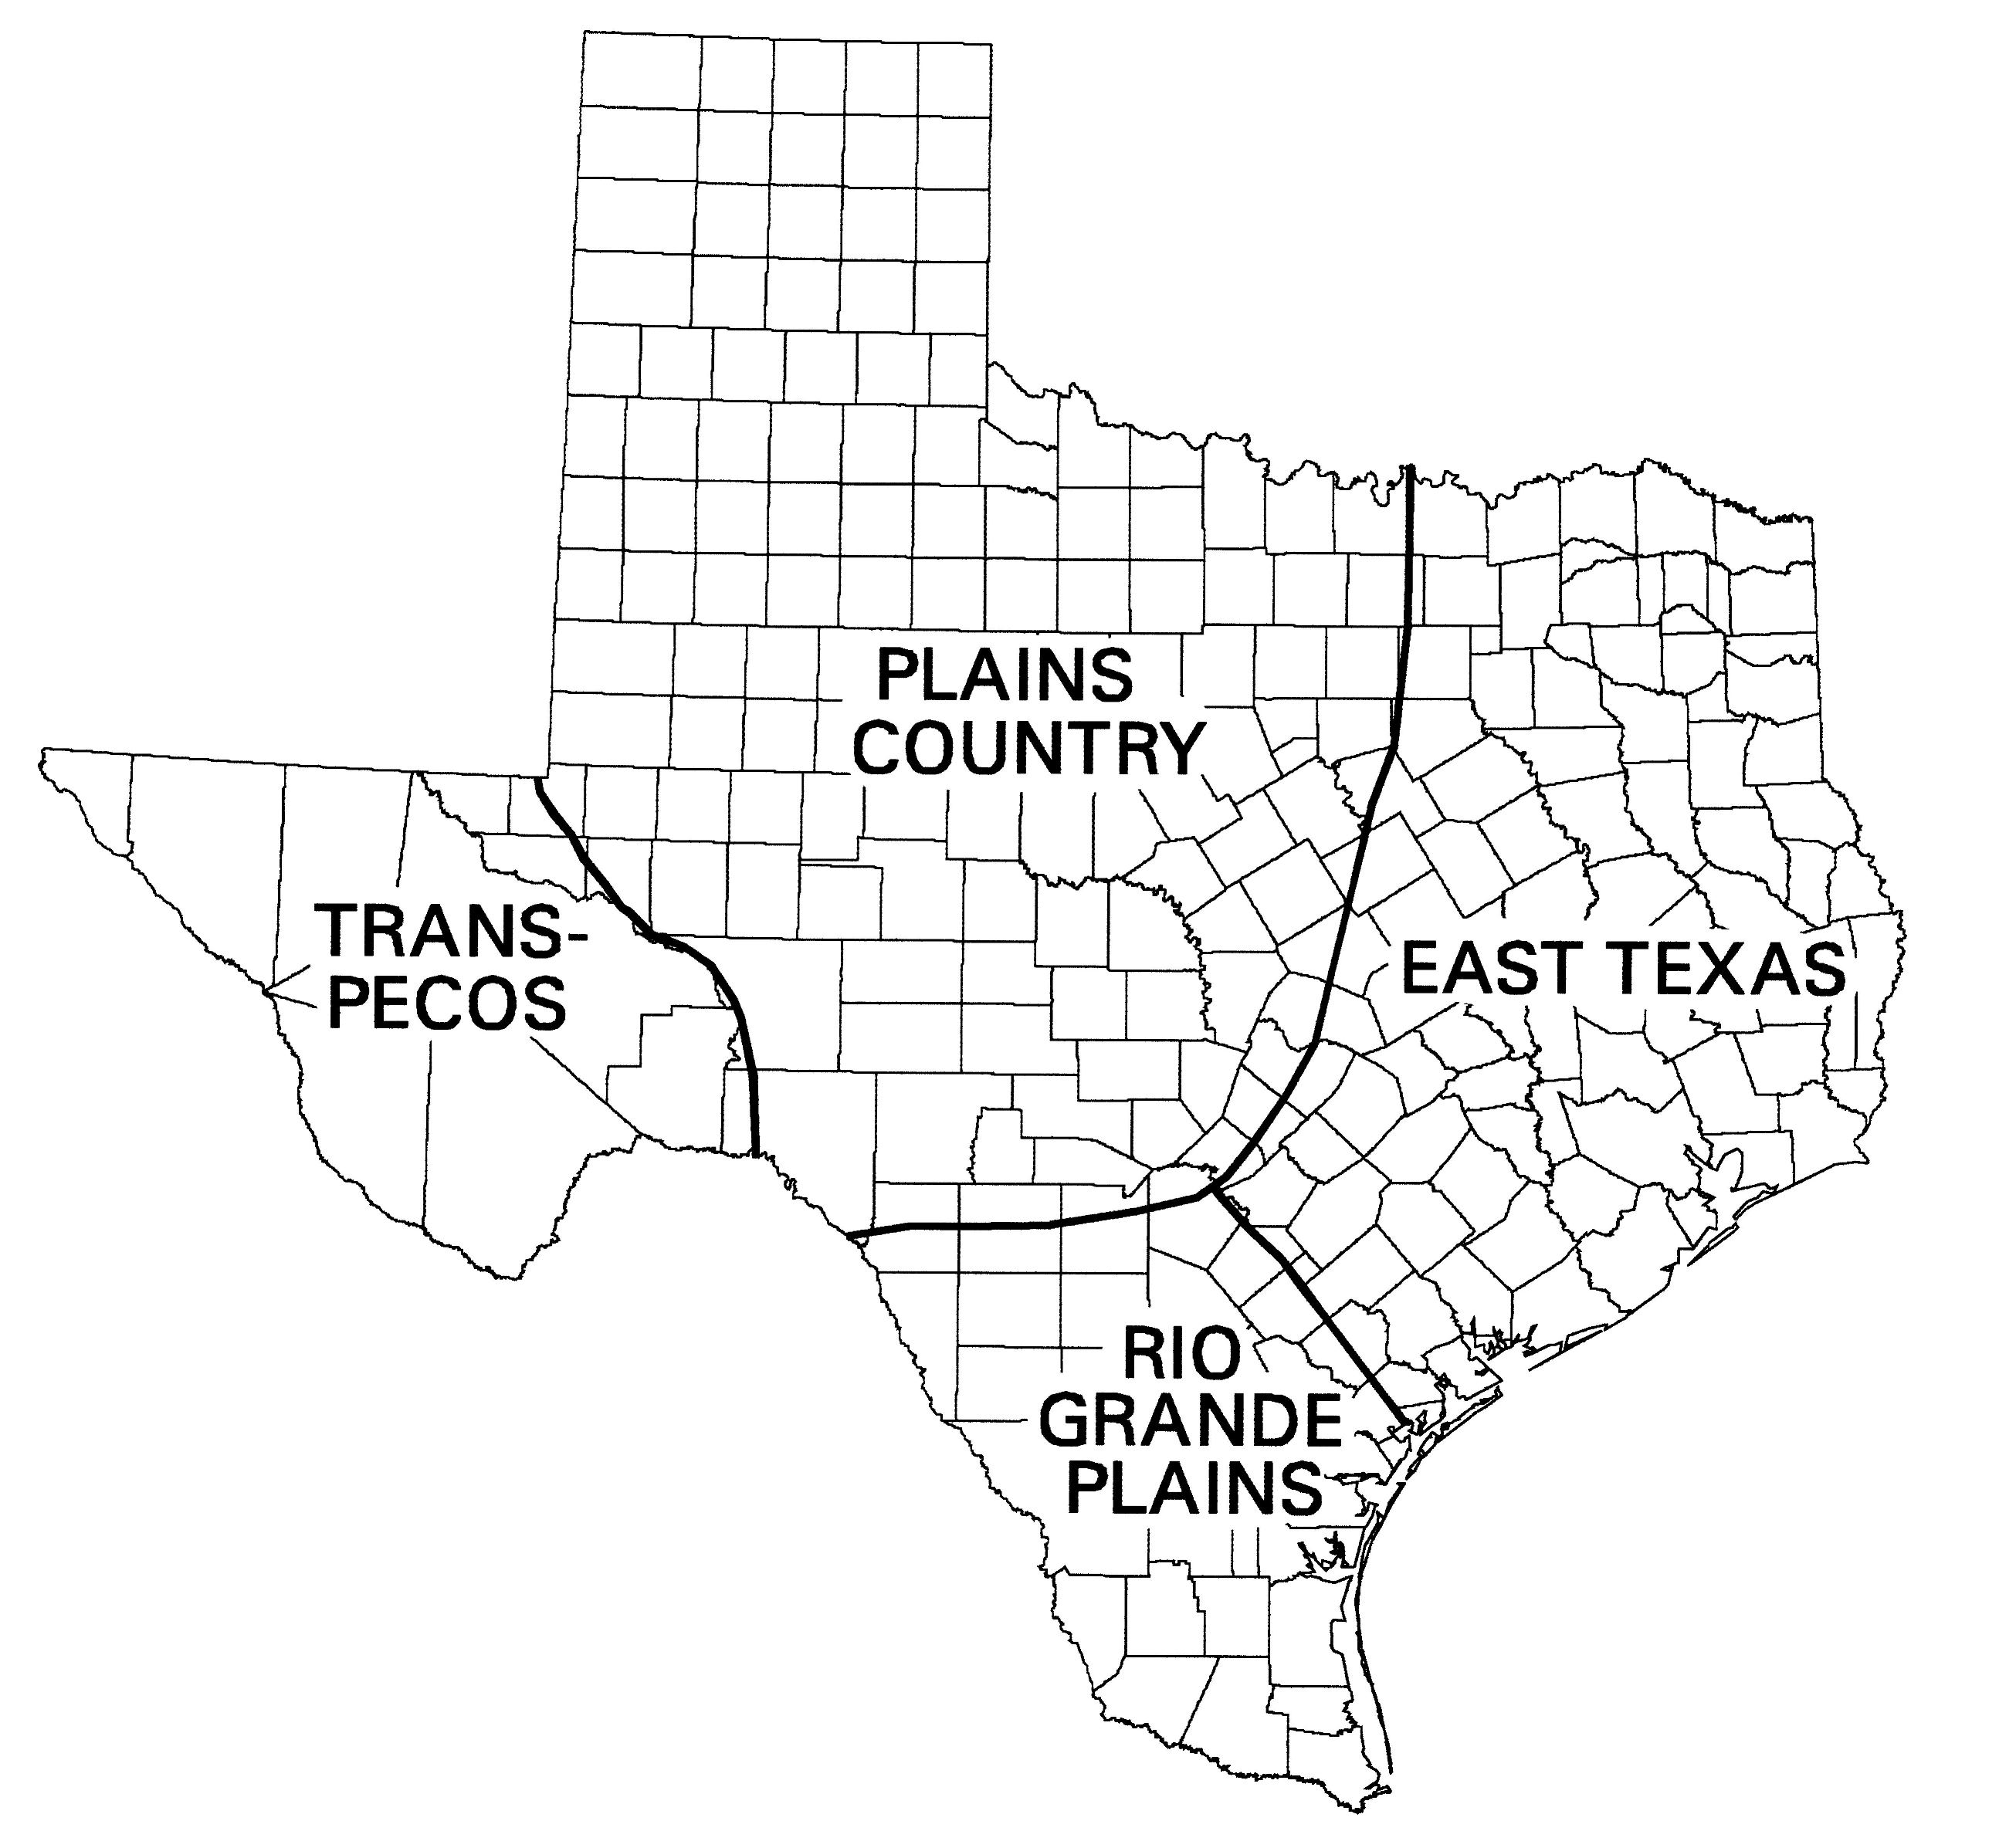 Four Regions of Texas